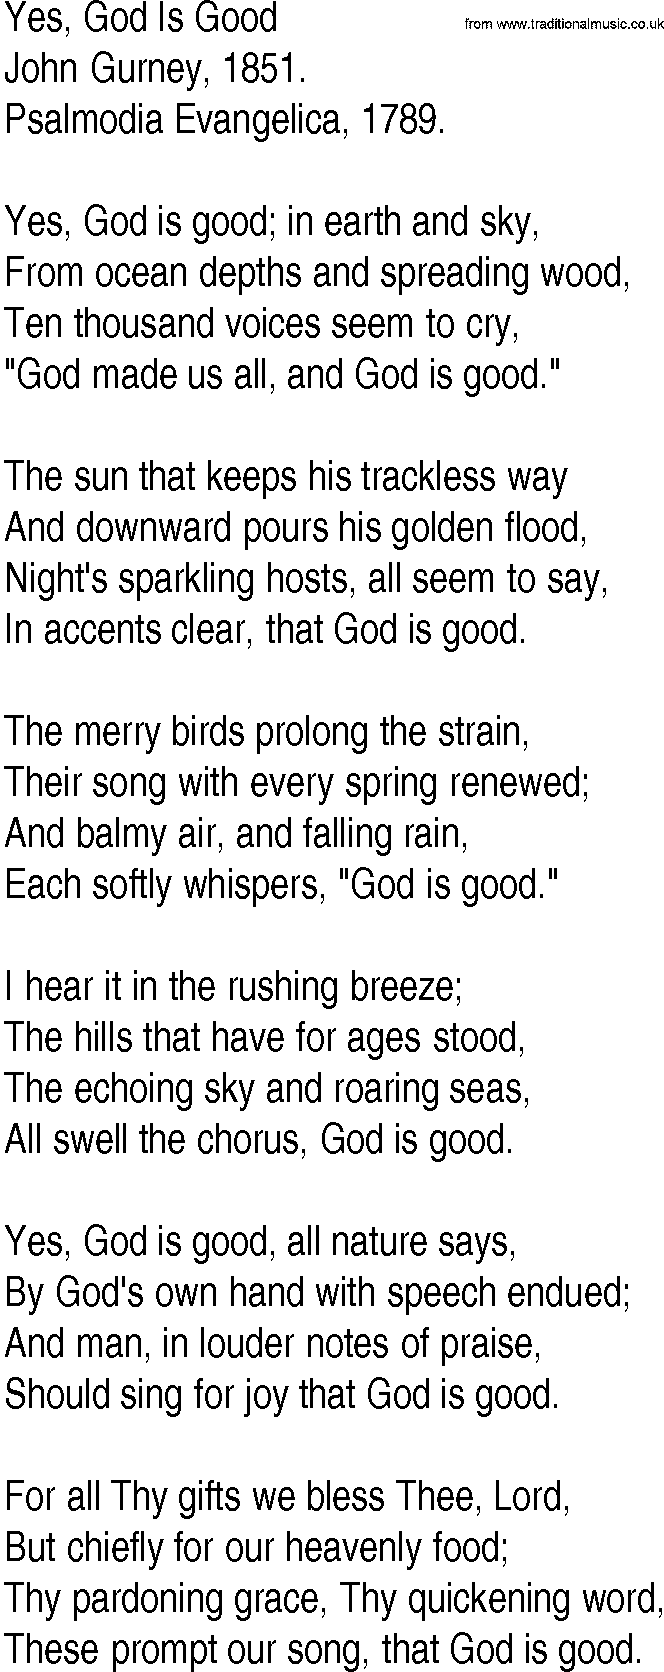 Hymn and Gospel Song: Yes, God Is Good by John Gurney lyrics